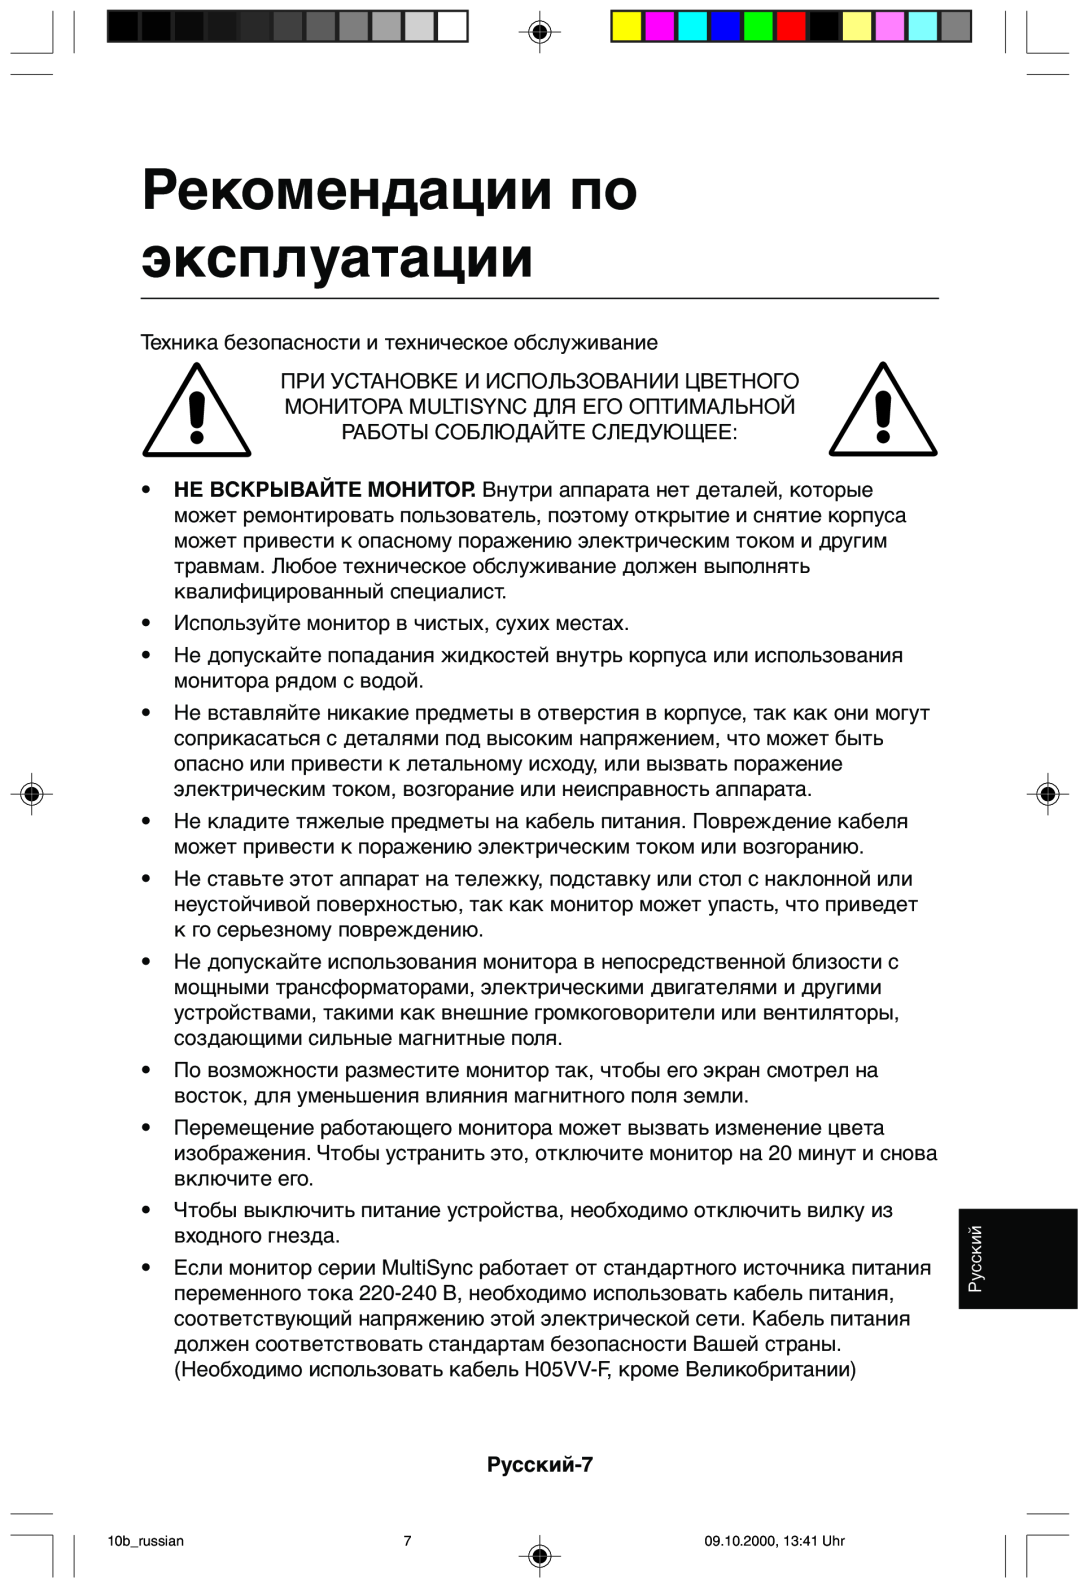 NEC 95F user manual Рекомендации по эксплуатации, Русский-7 